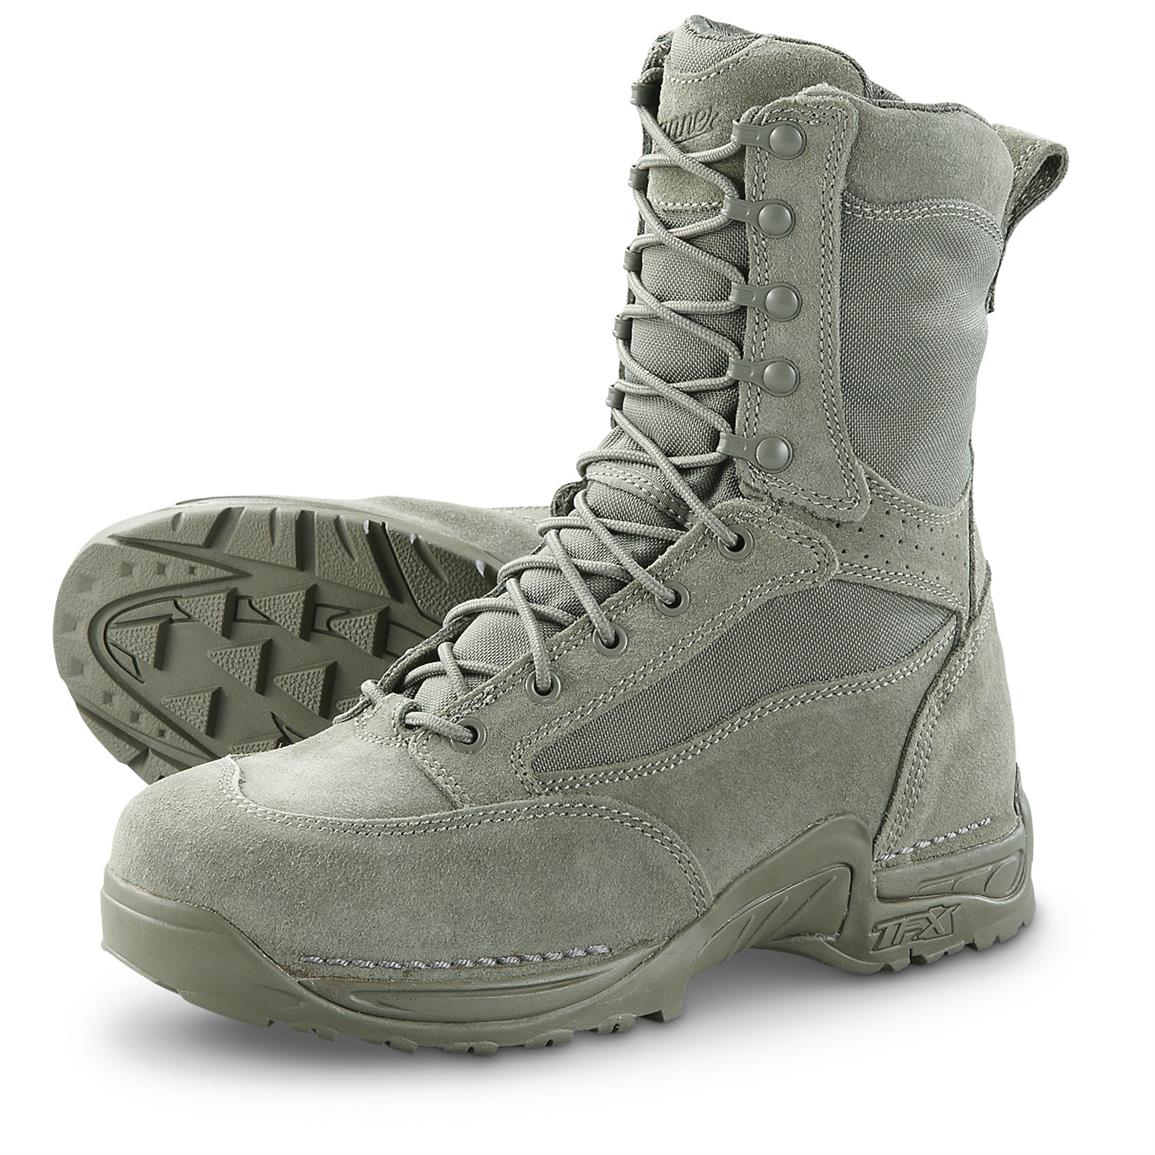 Danner USAF TFX Tactical Boots, Sage Green - 622996, Combat & Tactical ...